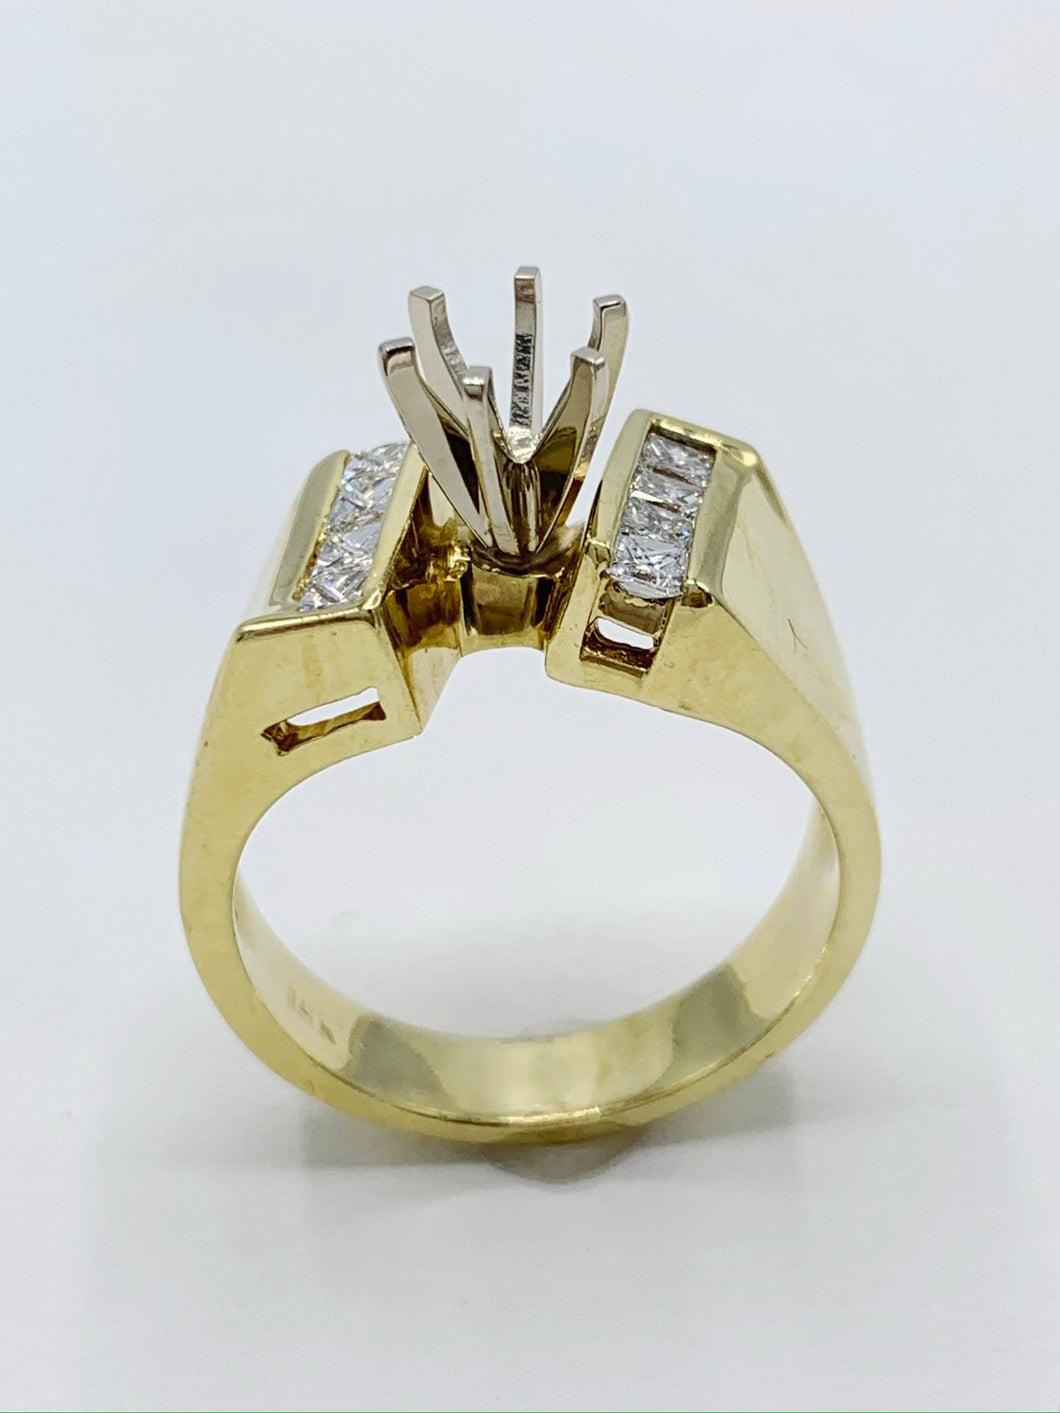 14K Yellow Gold .33TCW Princess Cut Diamond Semi-Mount Engagement Ring